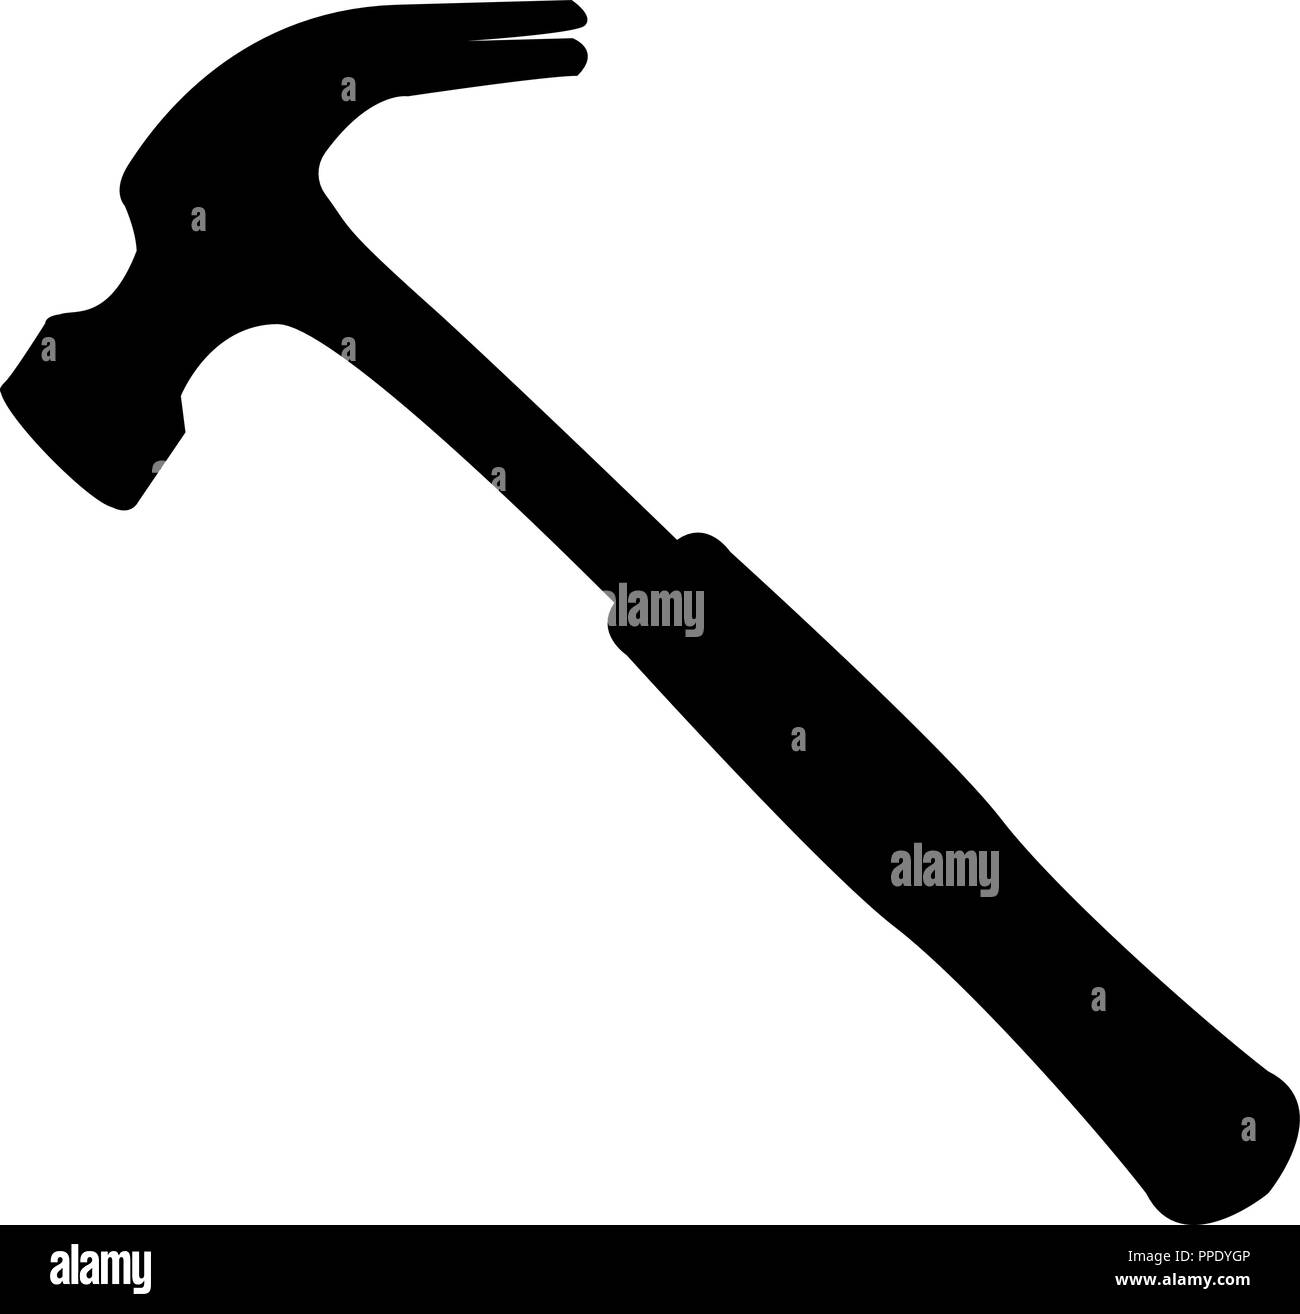 hammer silhouette isolated on white background vector illustration Stock  Vector Image & Art - Alamy